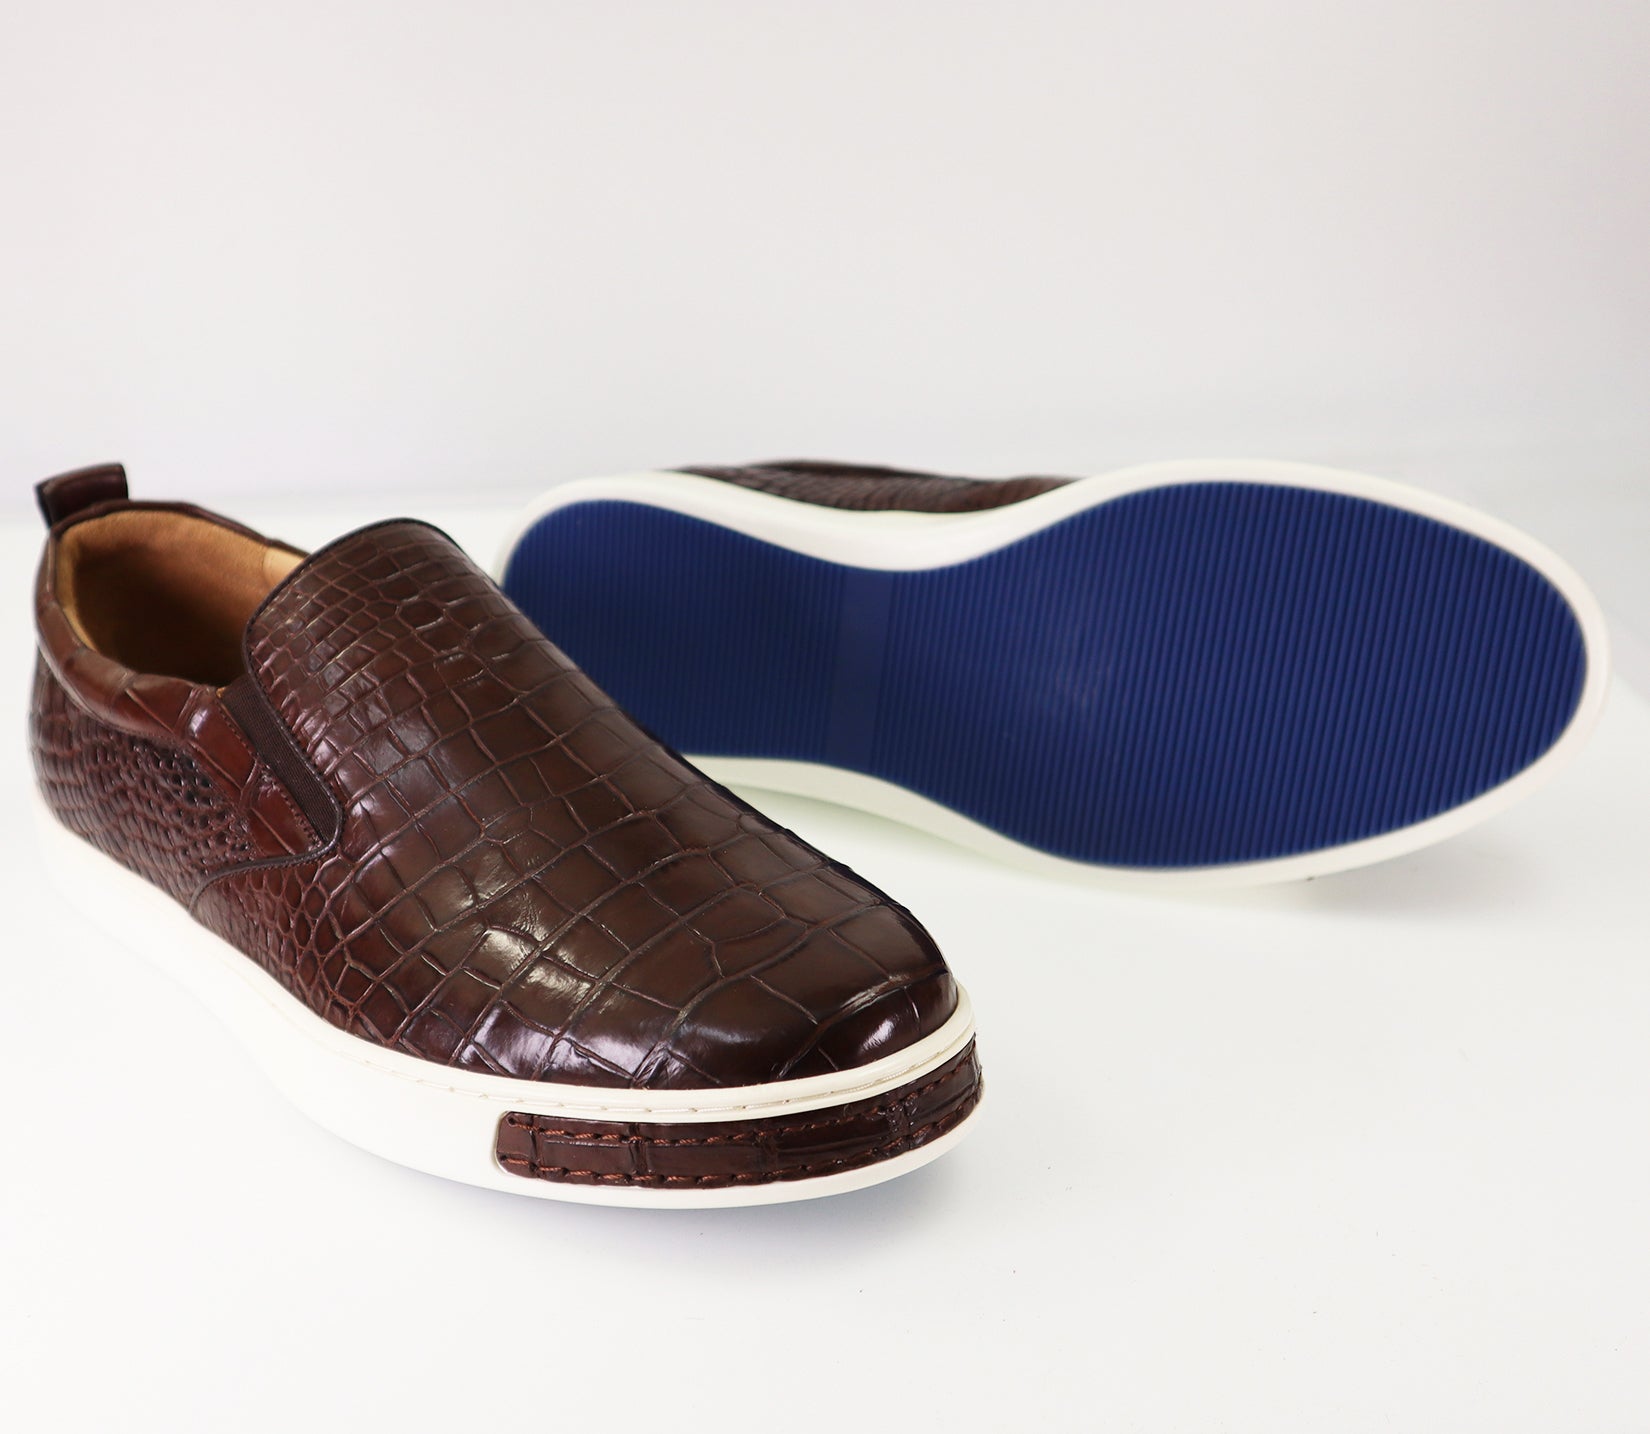 Men's Shoes Genuine Crocodile Alligator Skin Leather Color Dark Brown #S1831